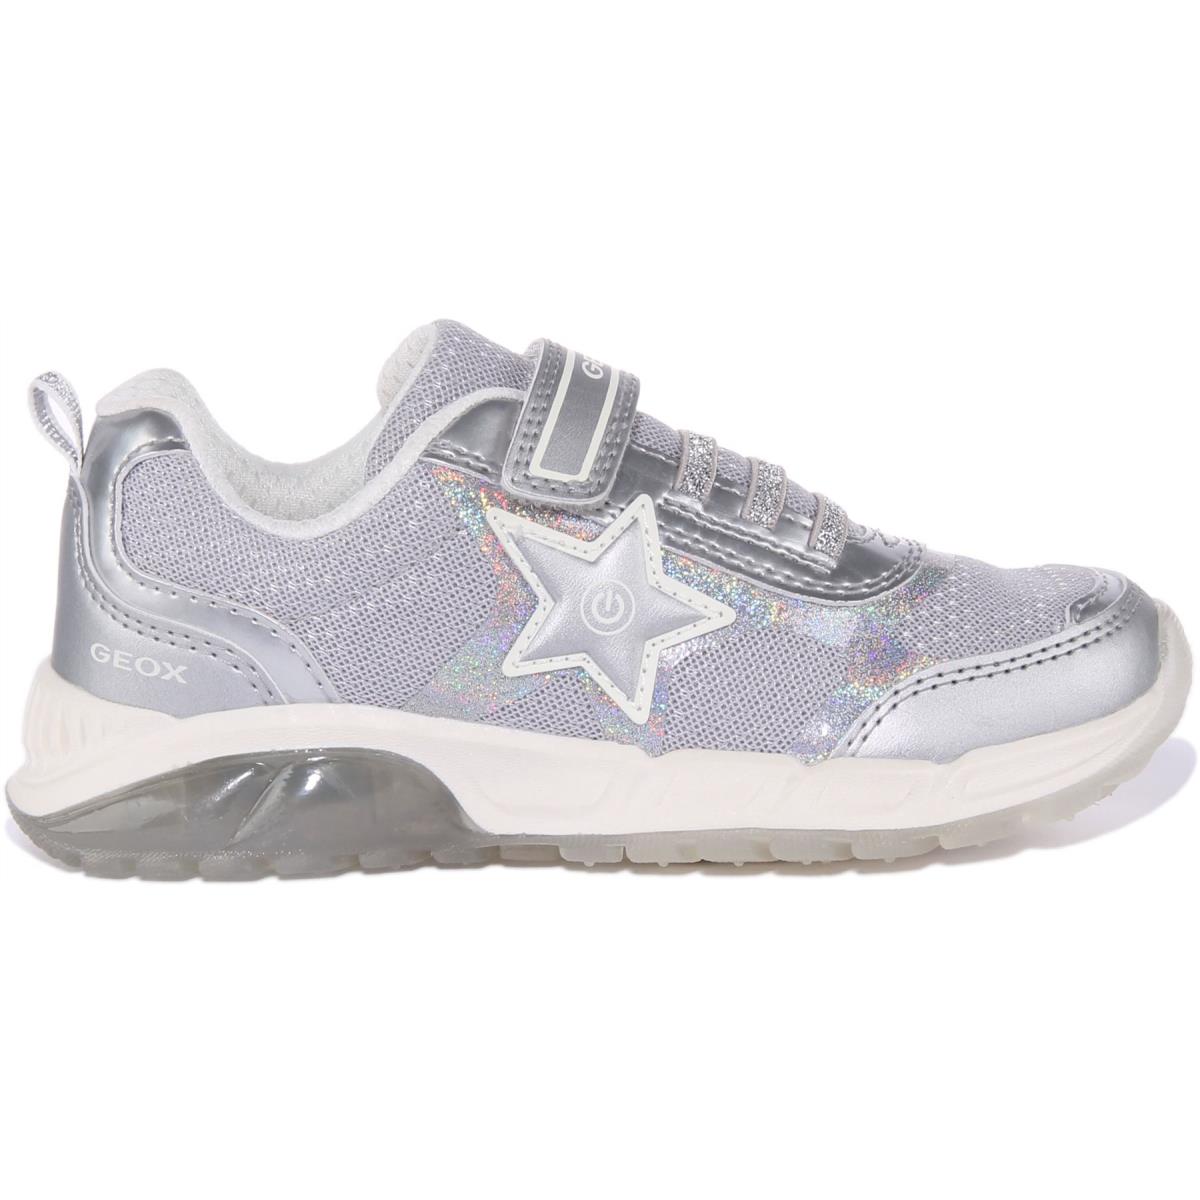 Geox J Spaziale Girls Light Up Star Slip On Sneakers In Silver Size US 9 - 4